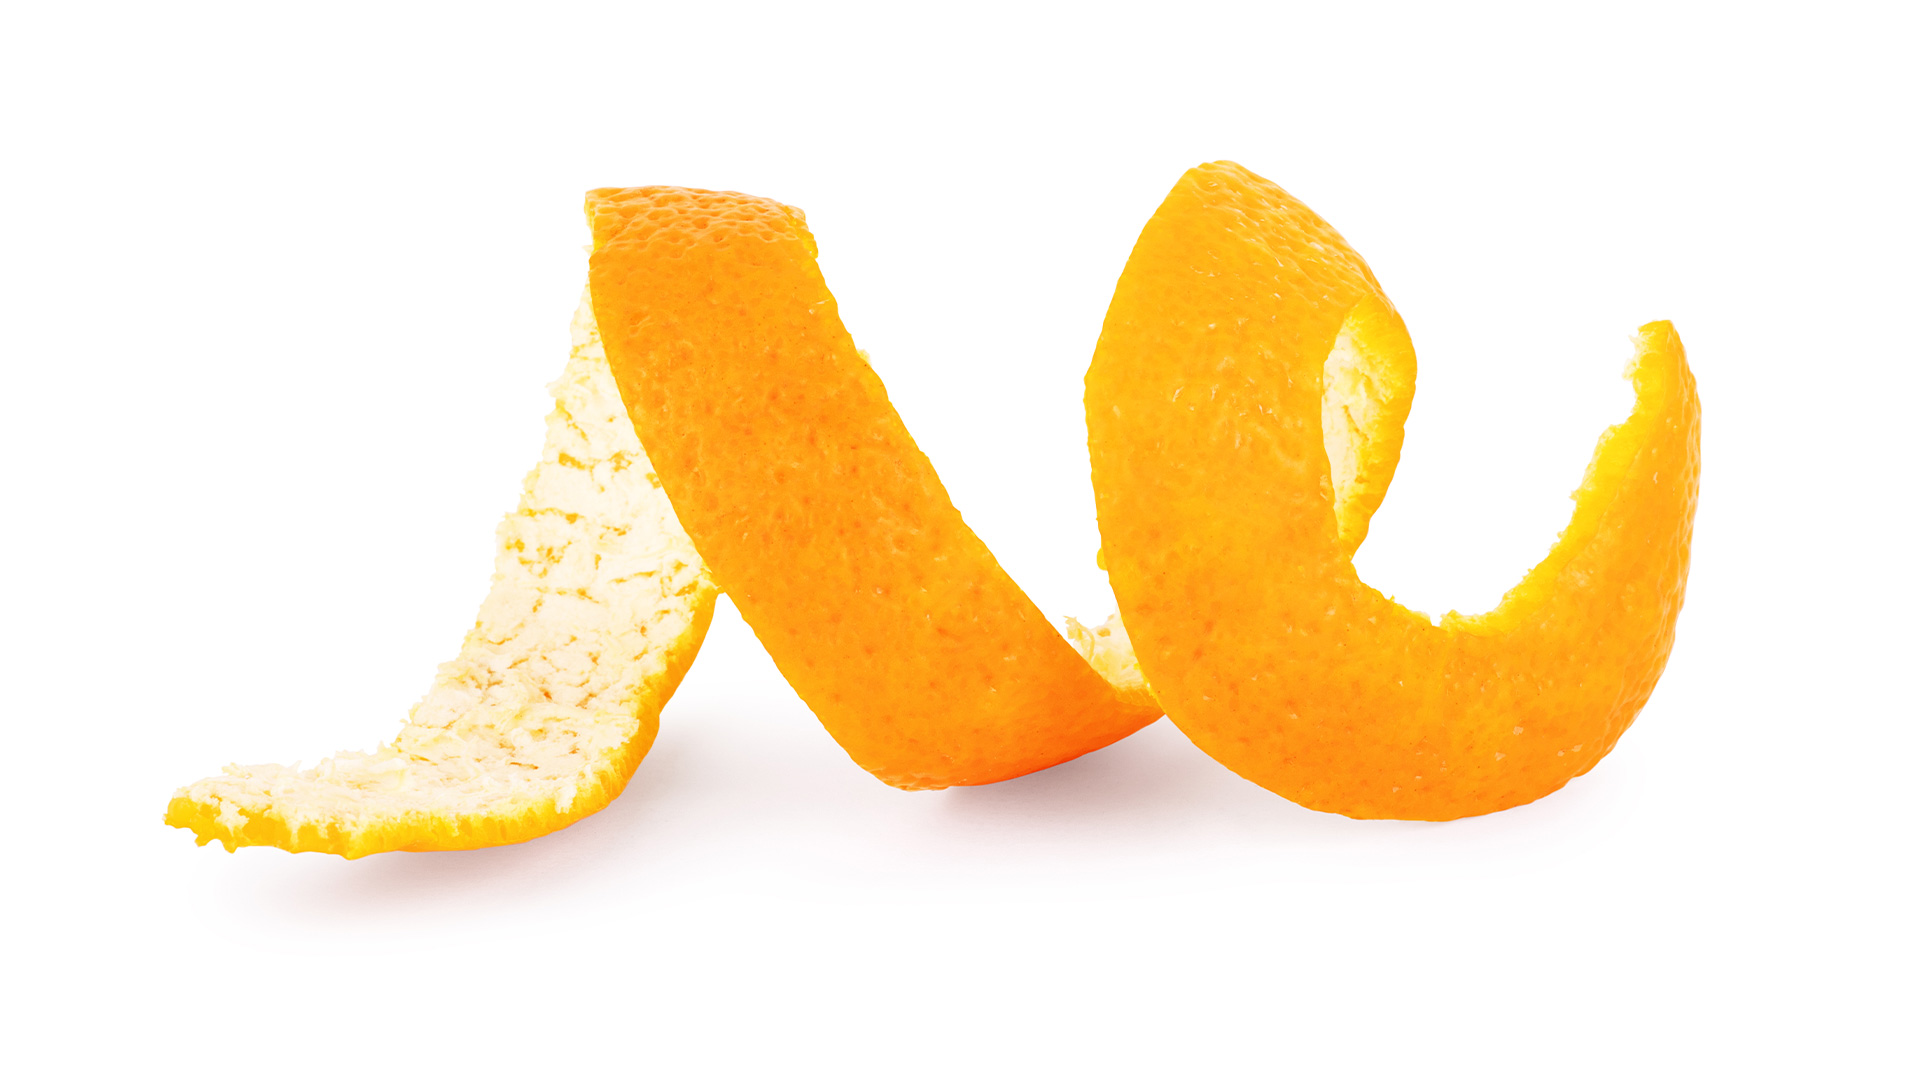 Piel de naranja, celulitis que nadie quiere